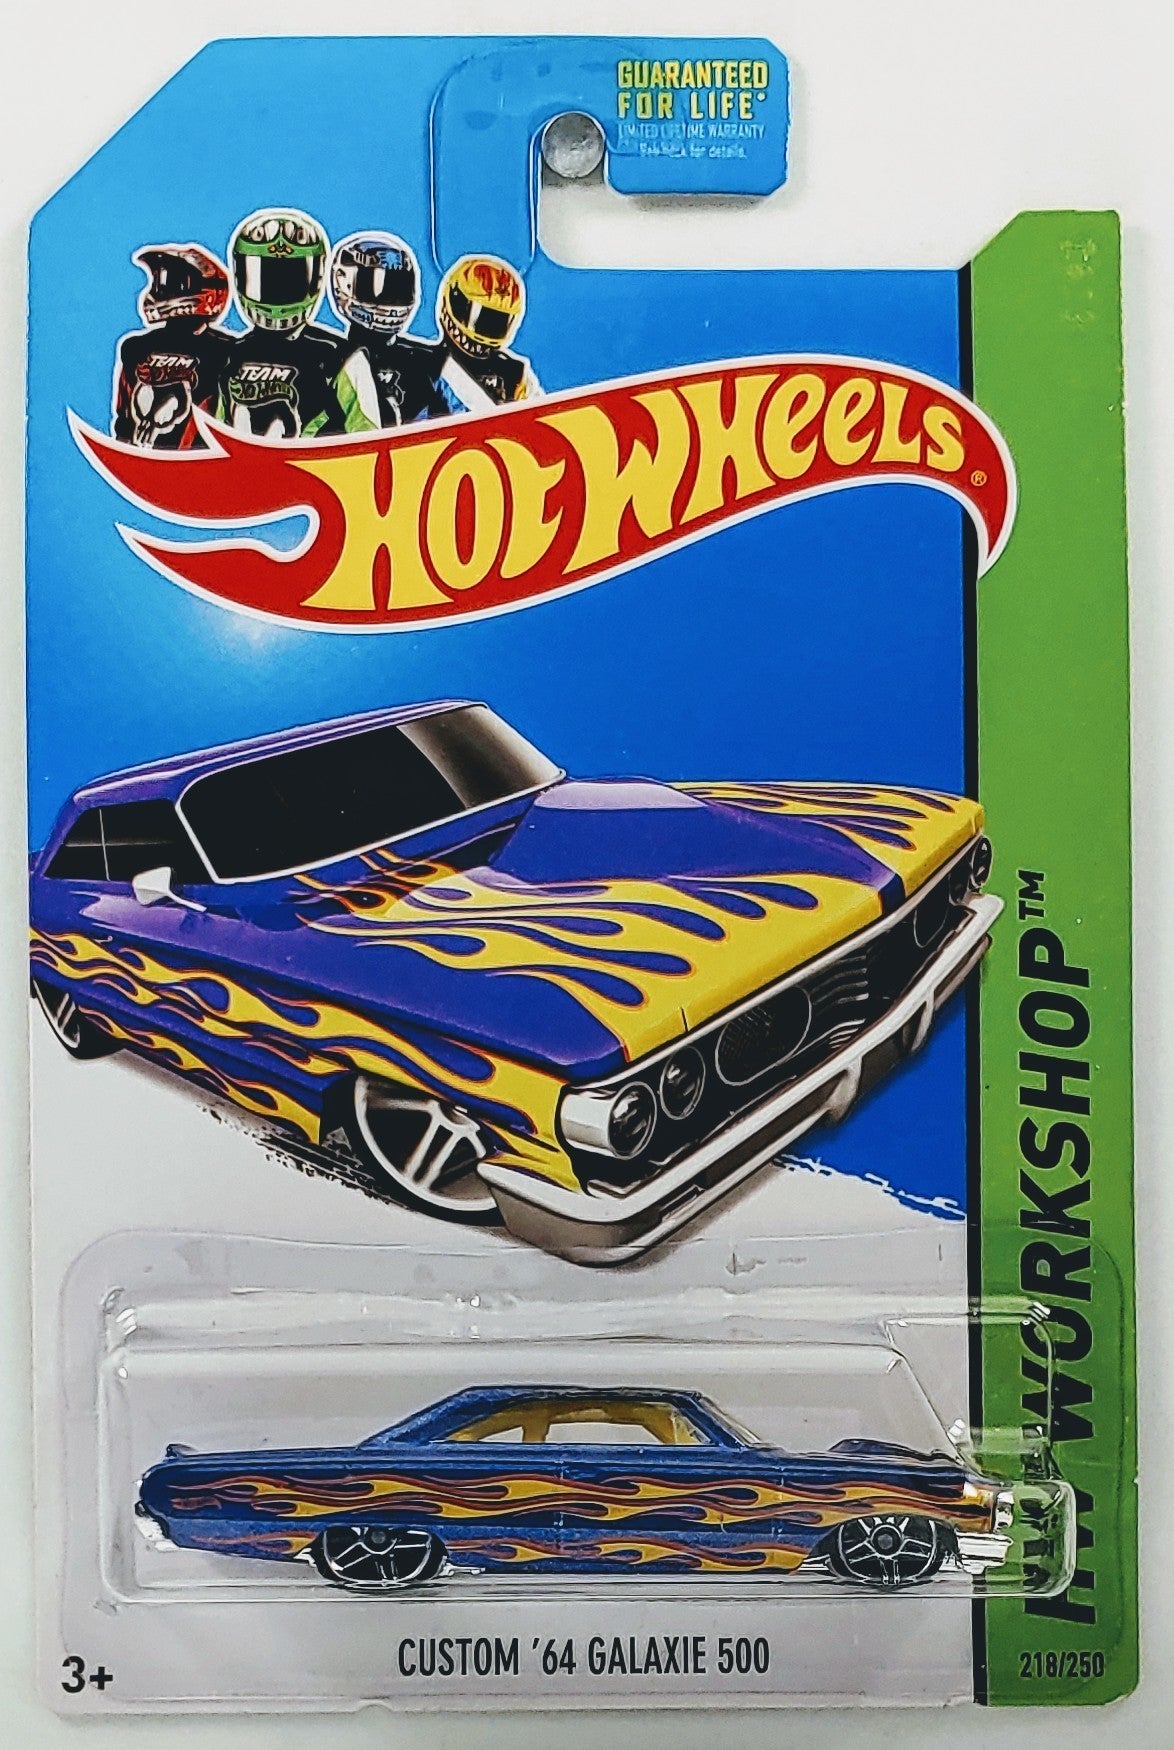 Hot Wheels 2013 - Collector # 218/250 - HW Showroom / Heat Fleet - Custom '64 Galaxie 500 - Metallic Blue - USA '14 HW Workshop Card - Kmart Exclusive